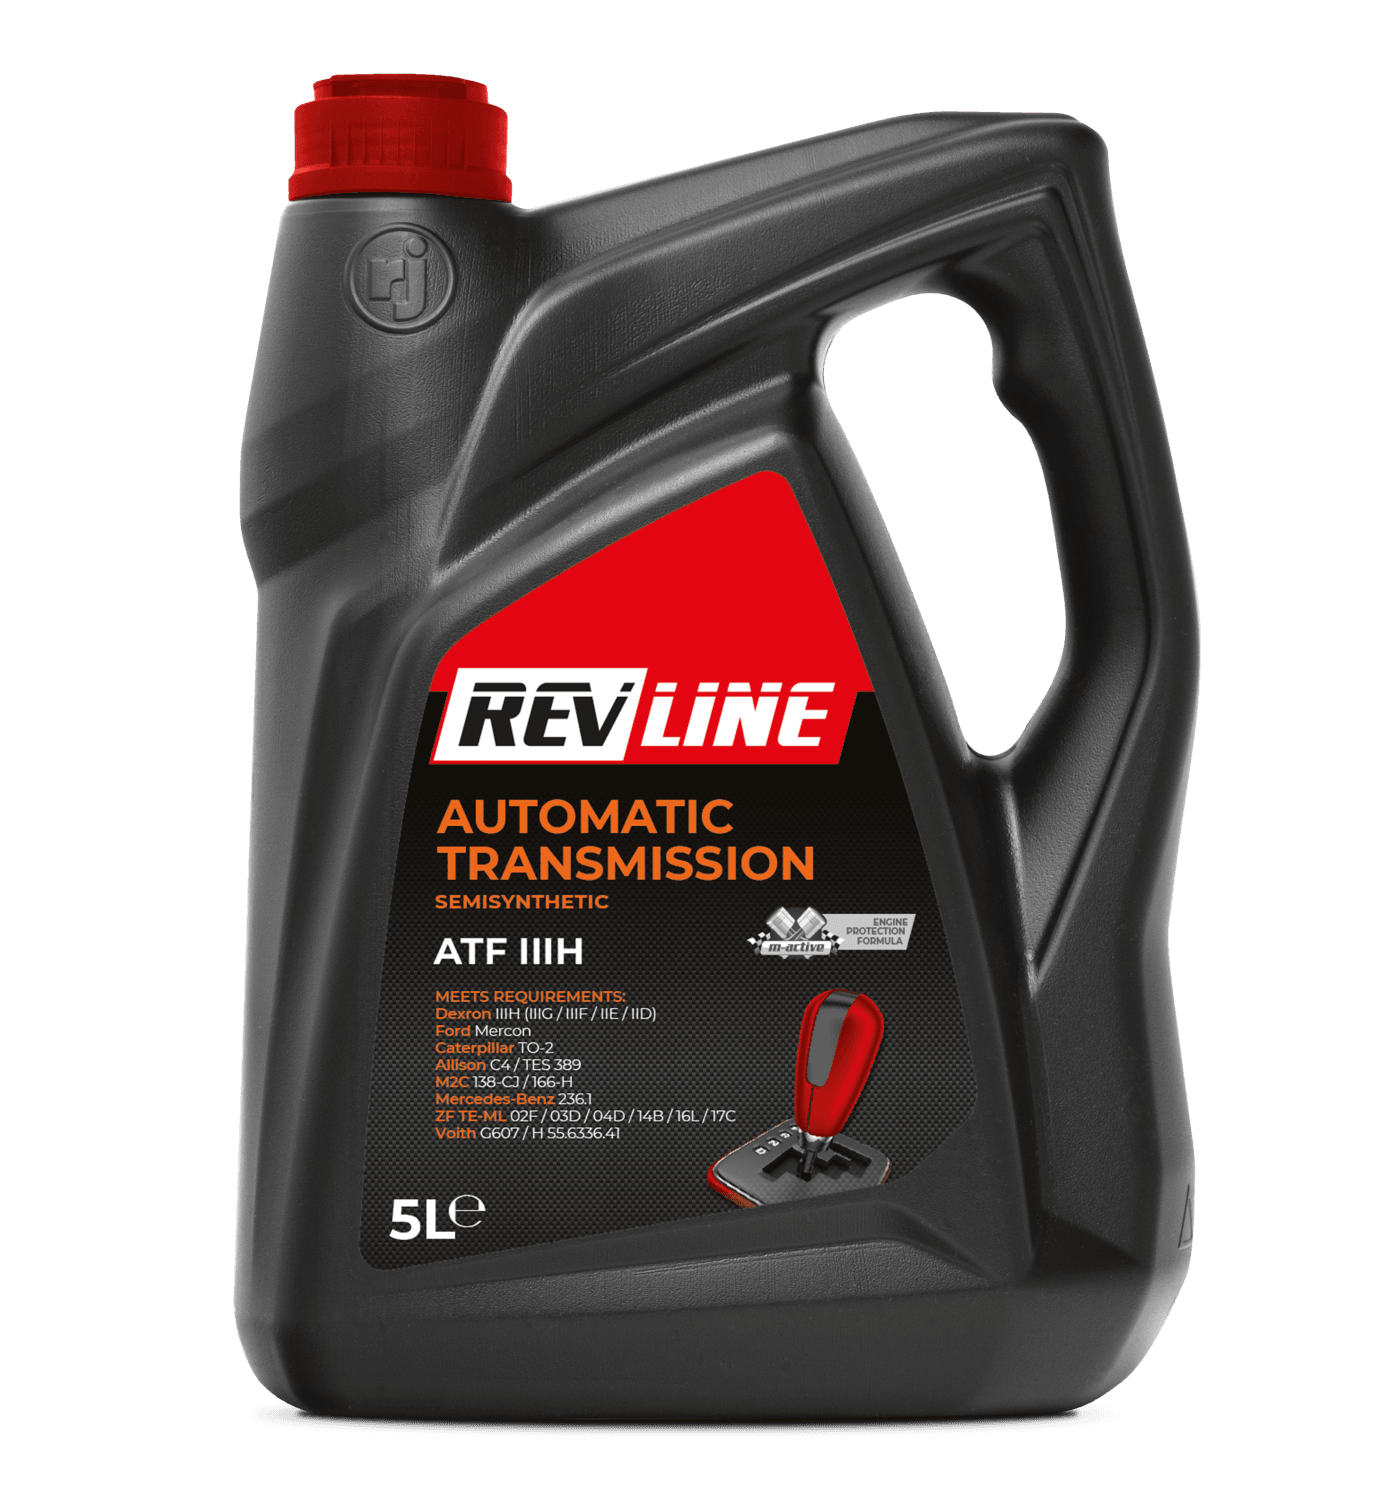 Revline Automatic ATF III H Semisynthetic 5L